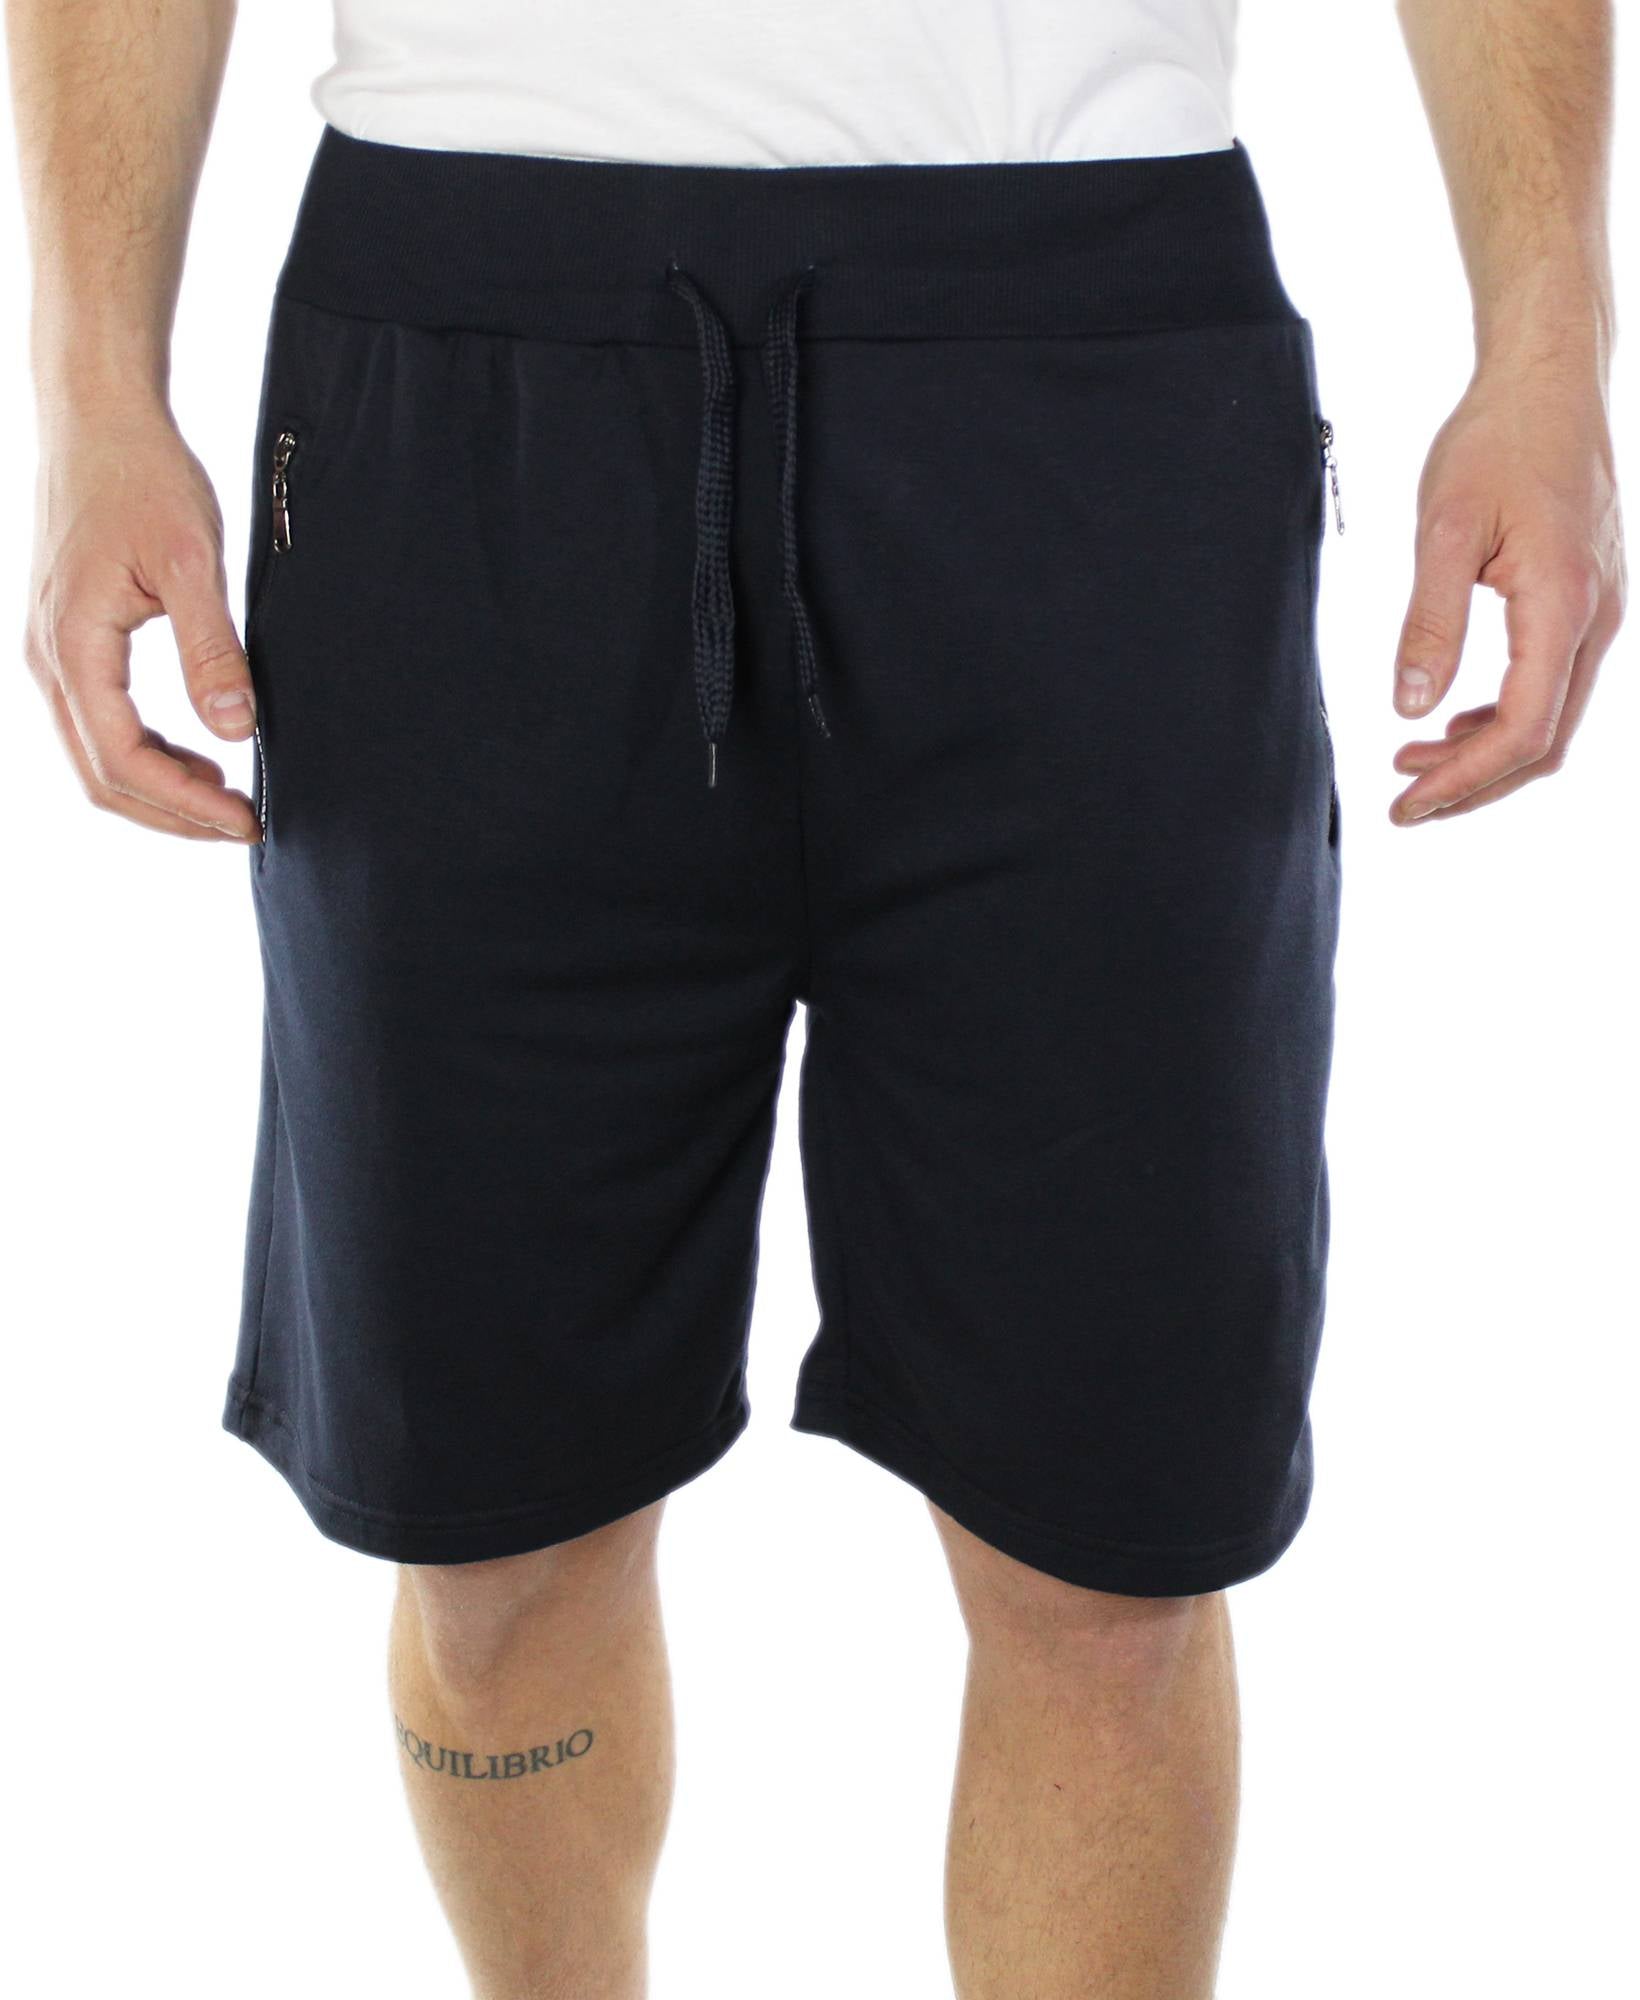 Bermuda shorts with zip pockets